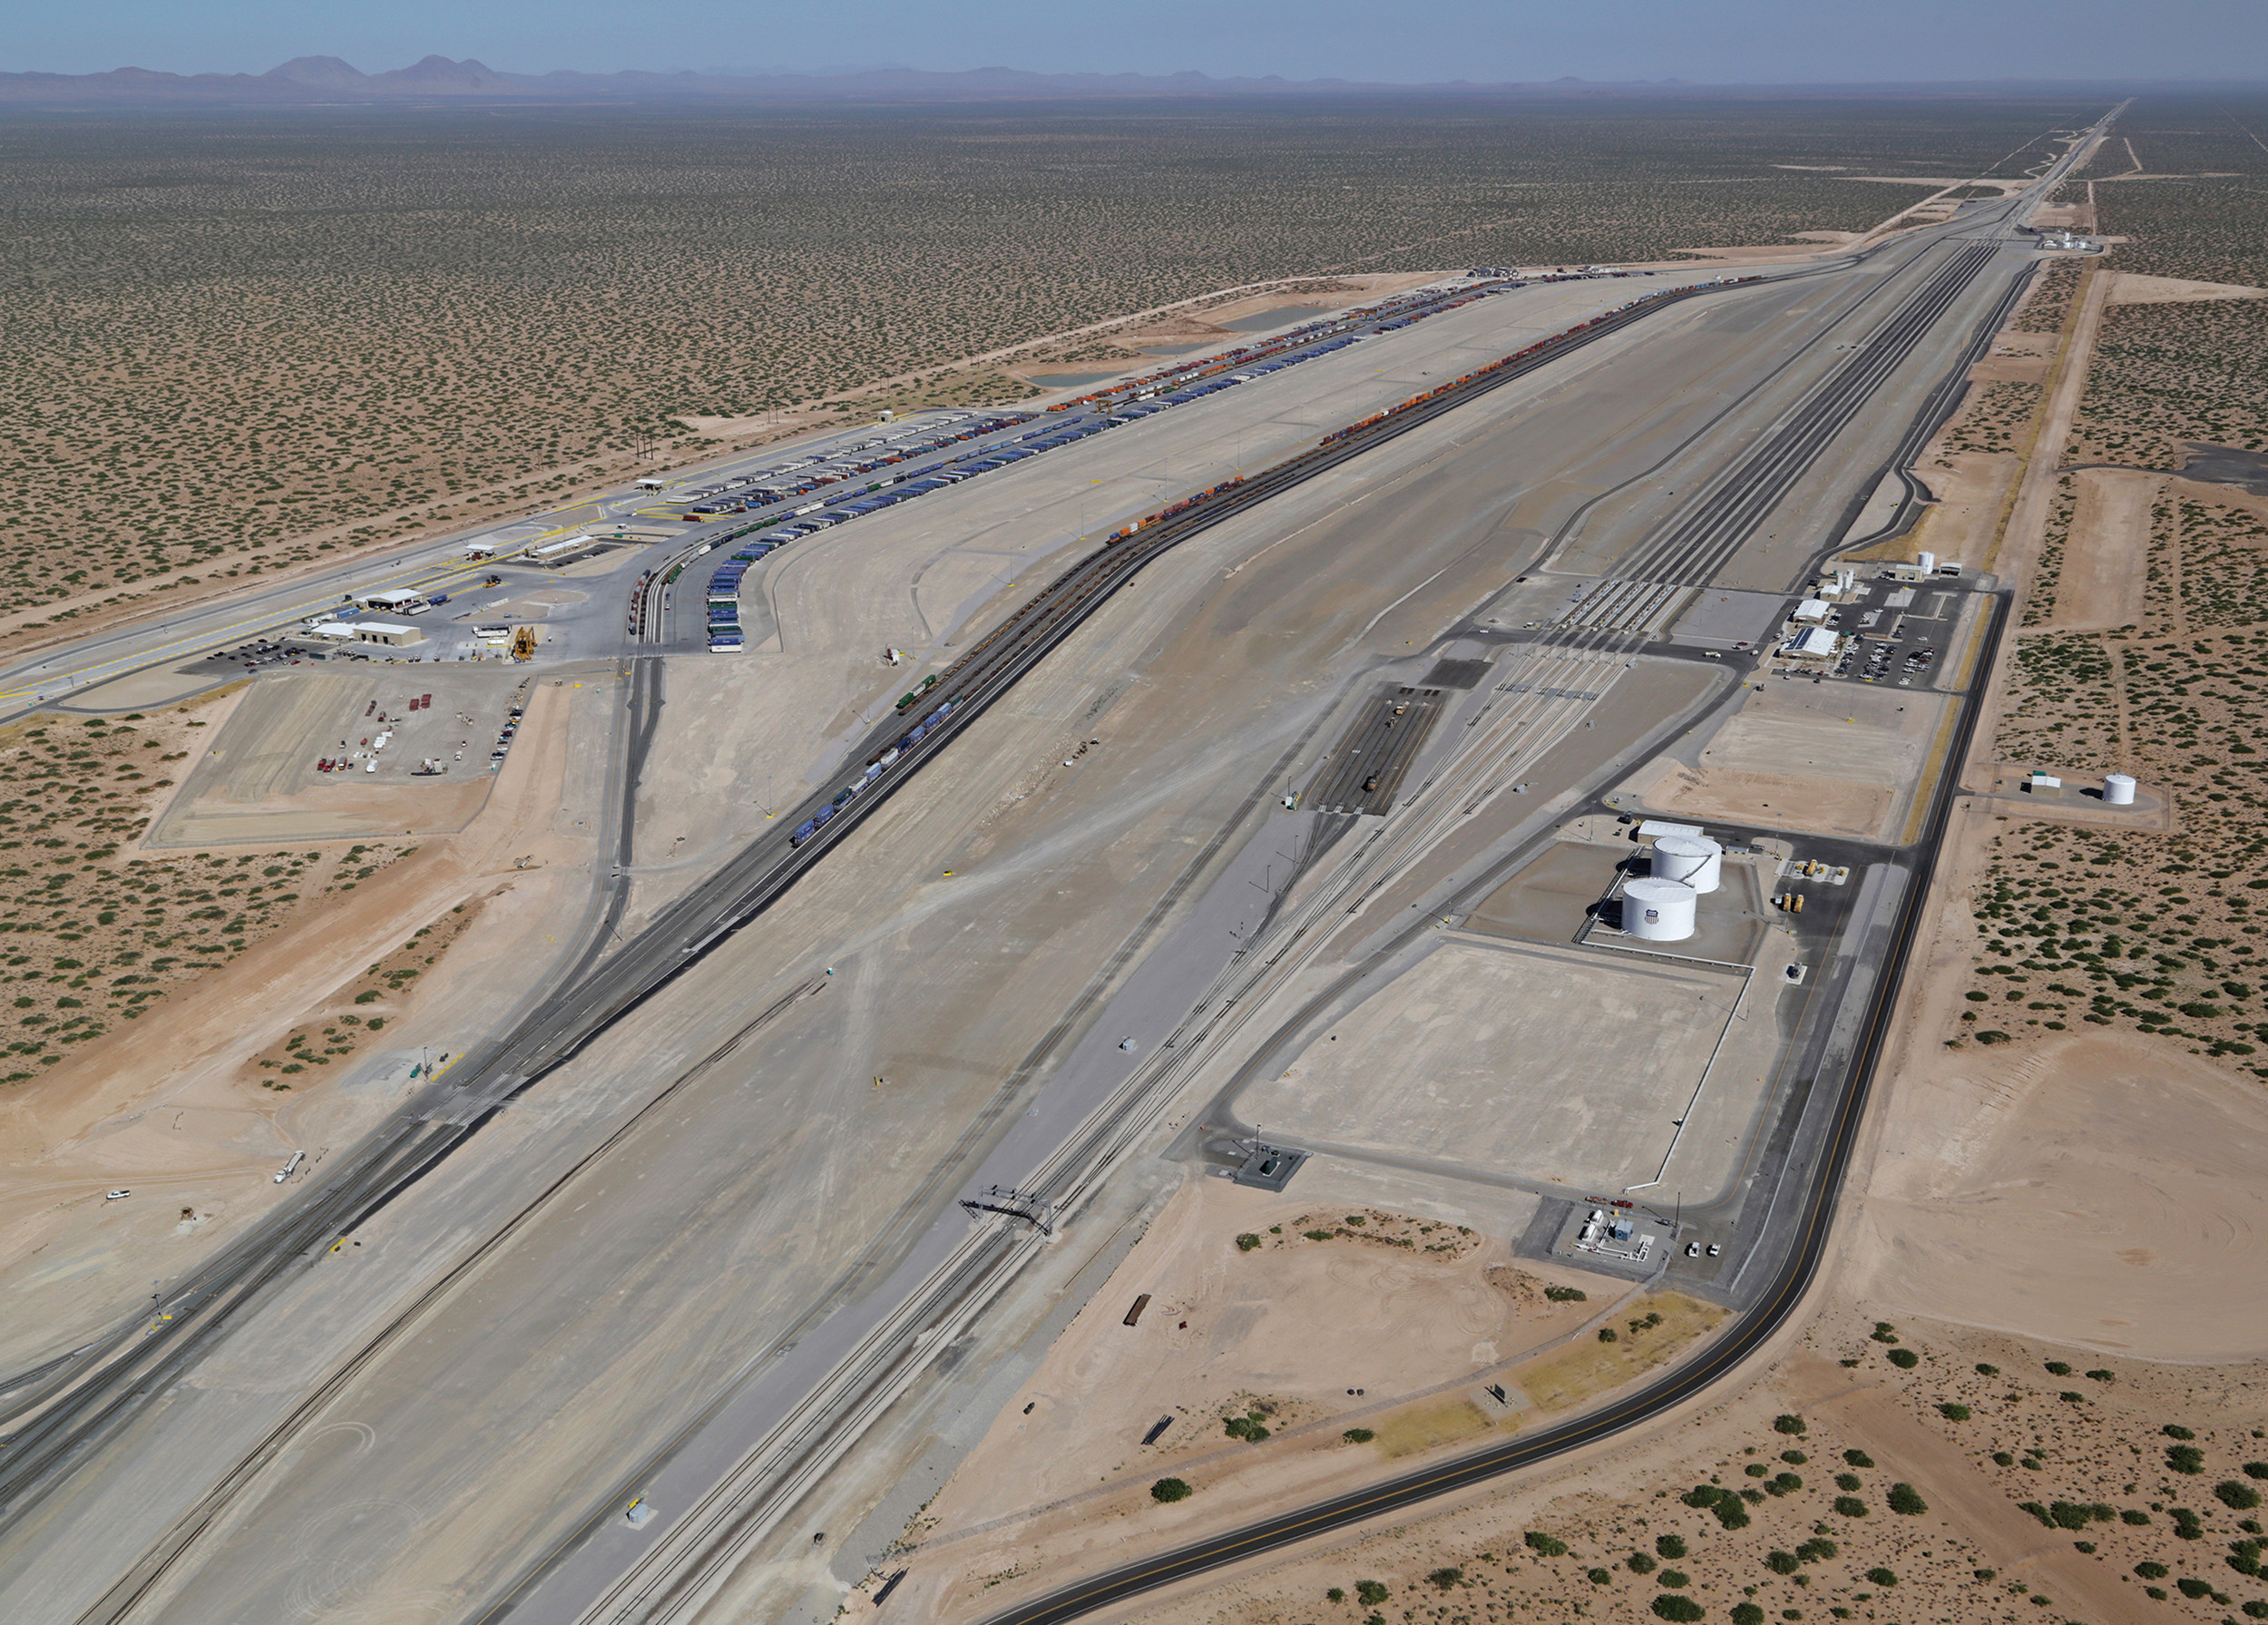 UPRR’s Santa Teresa Facility includes more than 40 miles of track.